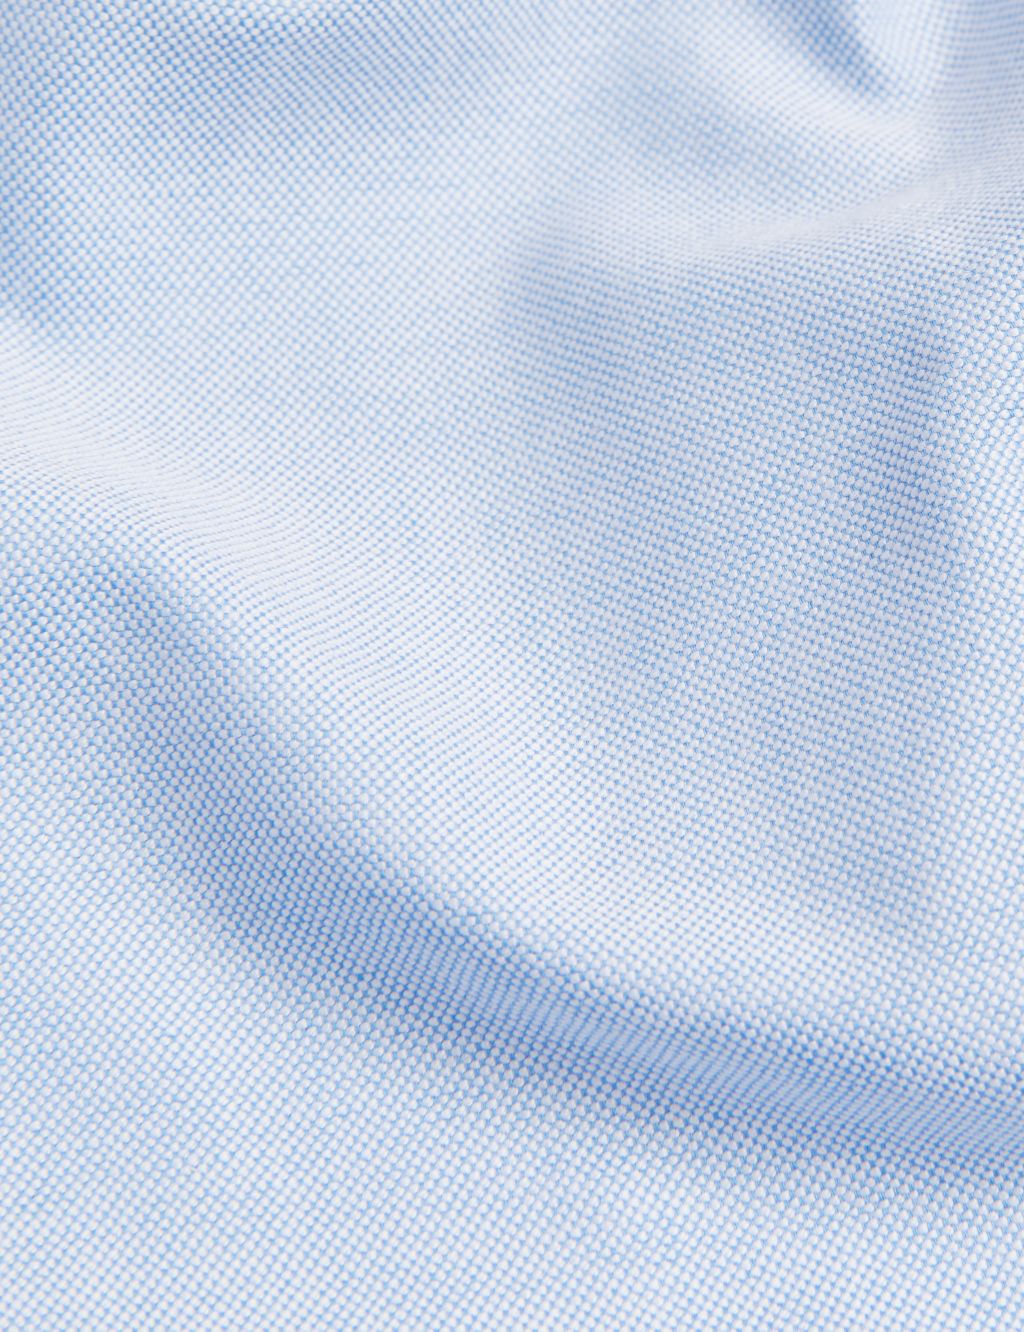 Regular Fit Pure Cotton Oxford Shirt image 2